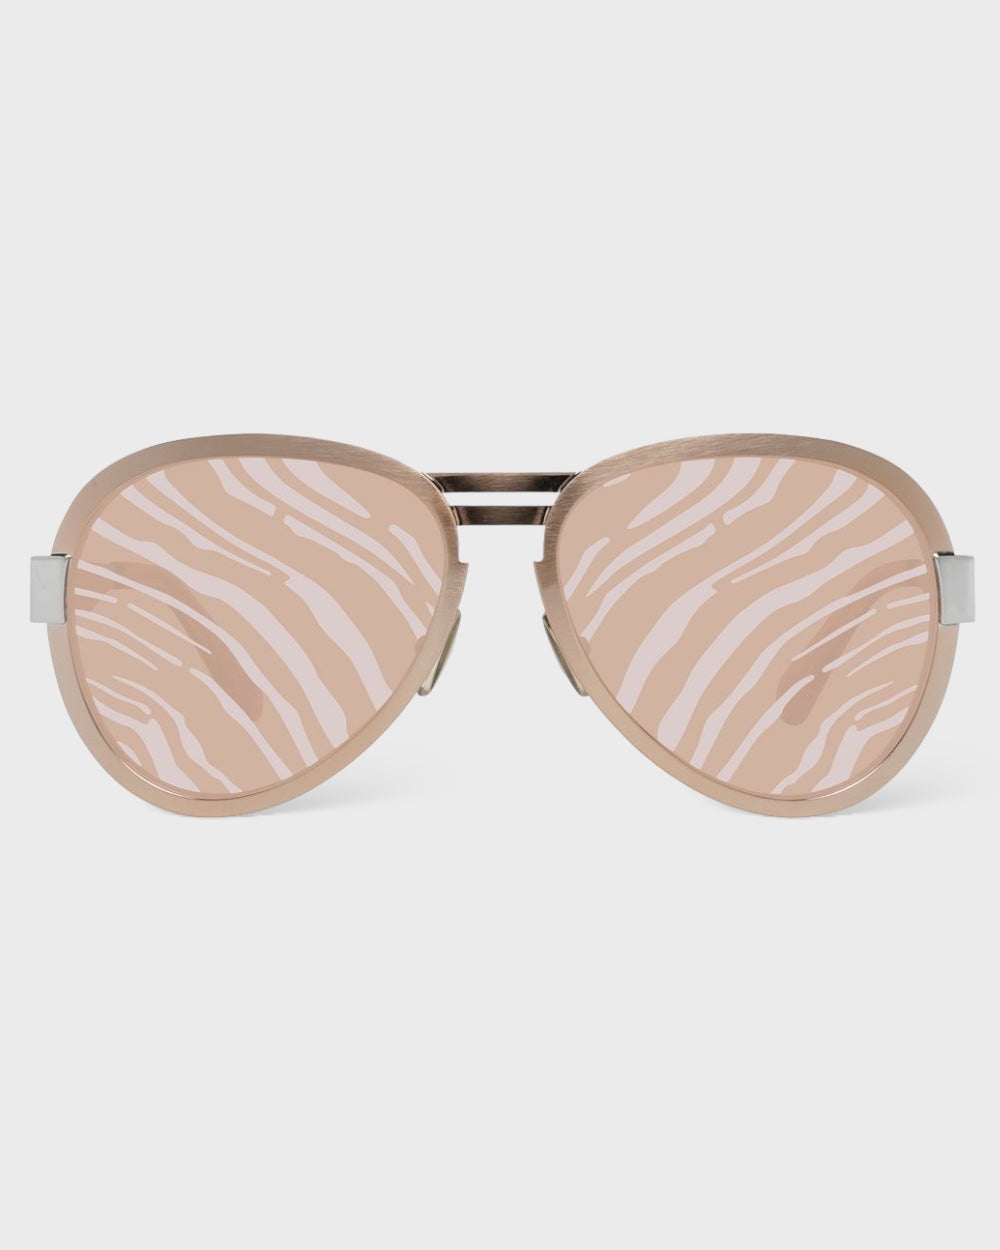 Roberto Cavalli Rose Gold Women Sunglasses